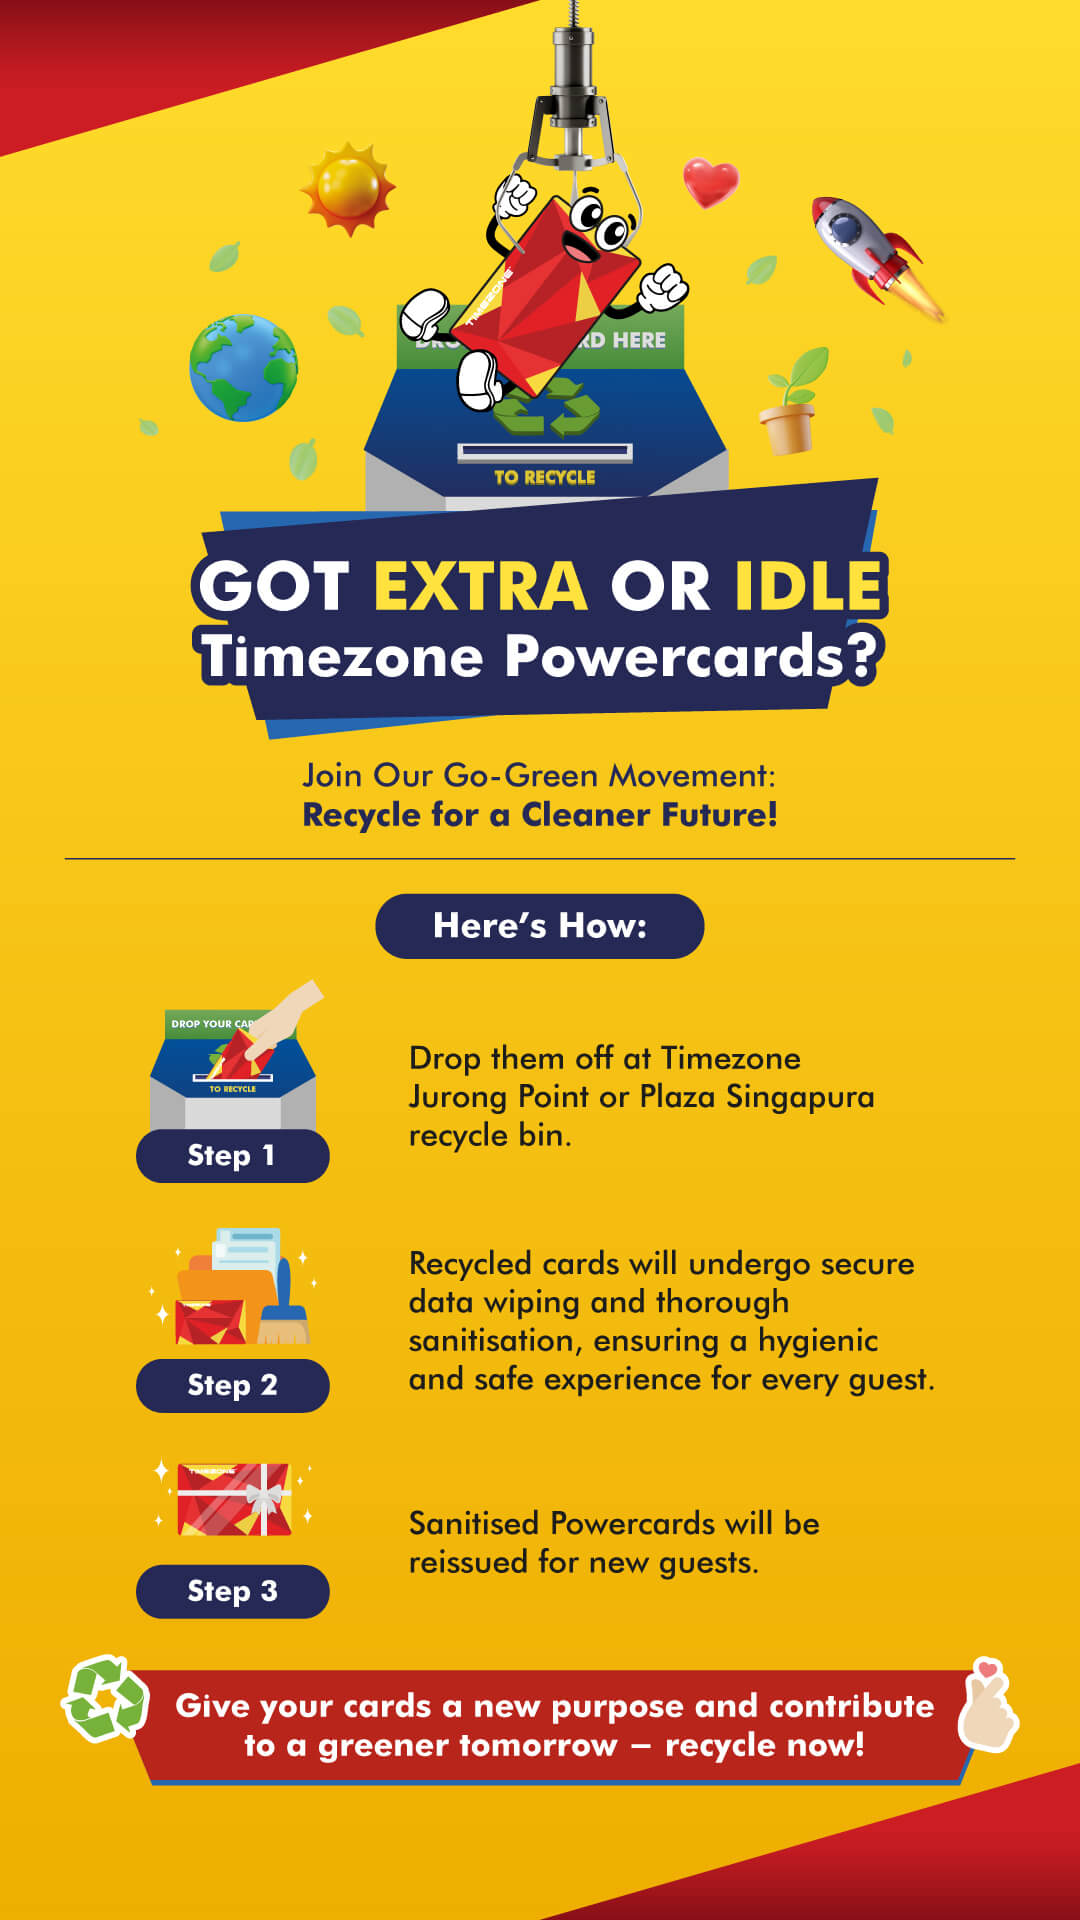 Timezone Powercards Recycling Program!